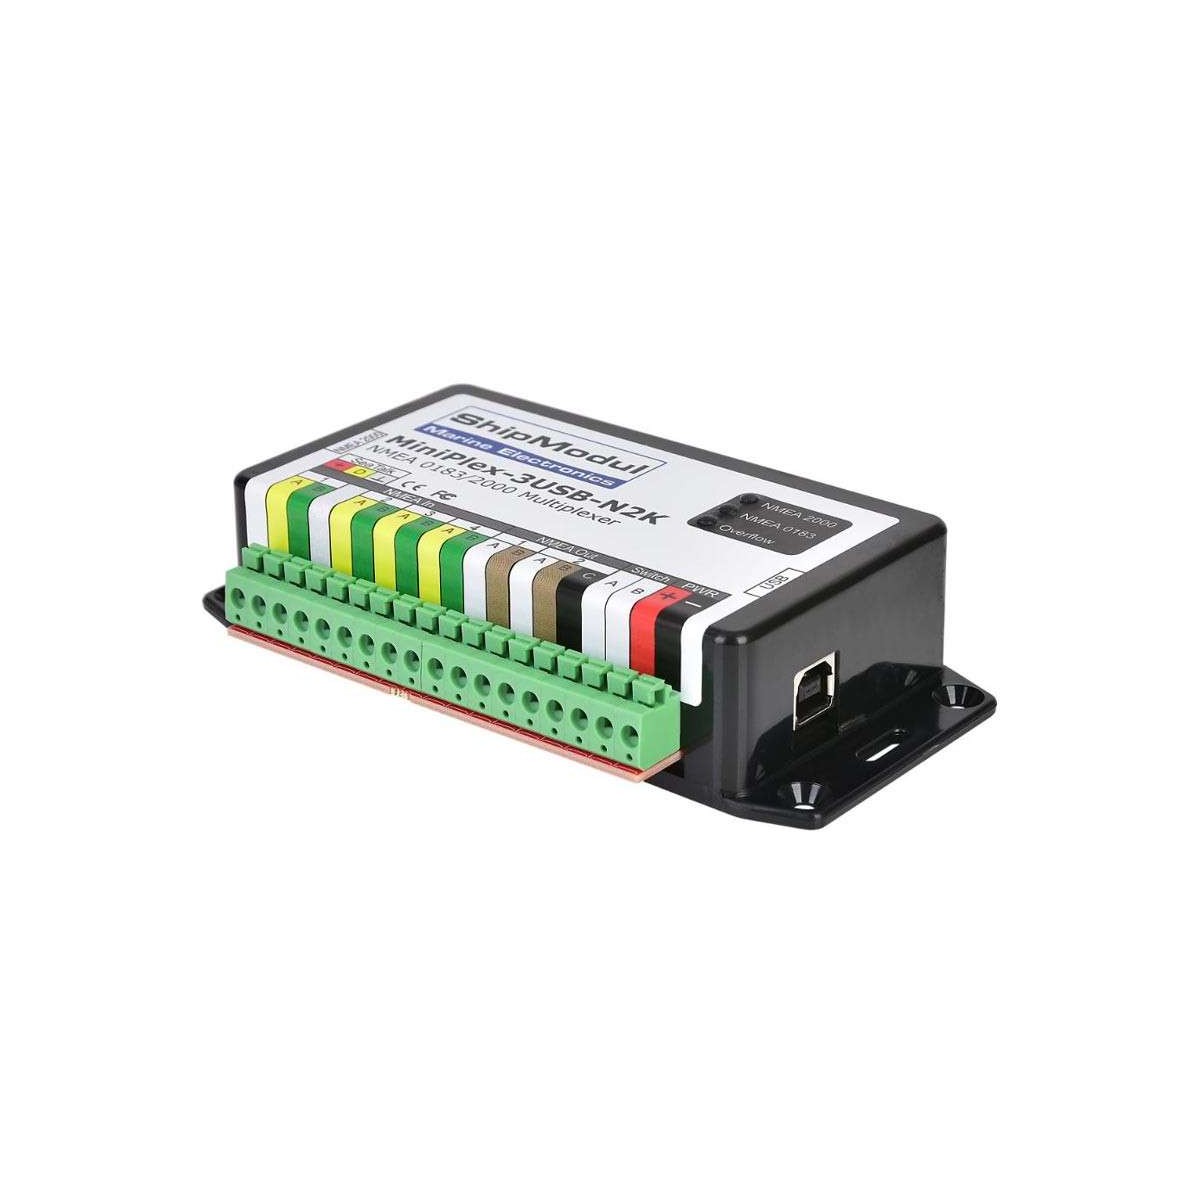 Multiplexeur MiniPlex 3USB - N2K - NMEA2000 / NMEA0183 / USB